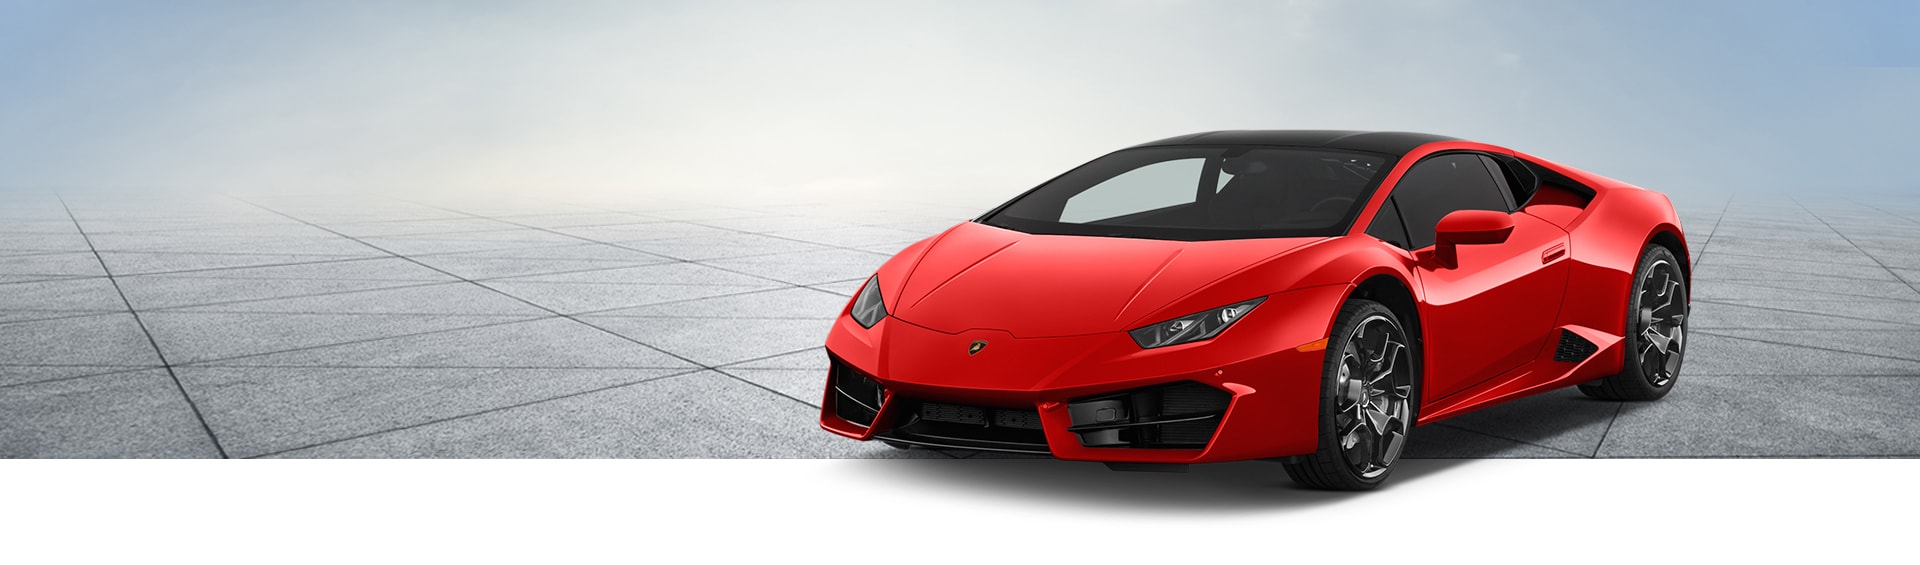 Lamborghini Huracan Car Rental Exotic Car Collection Enterprise Rent-a- Car